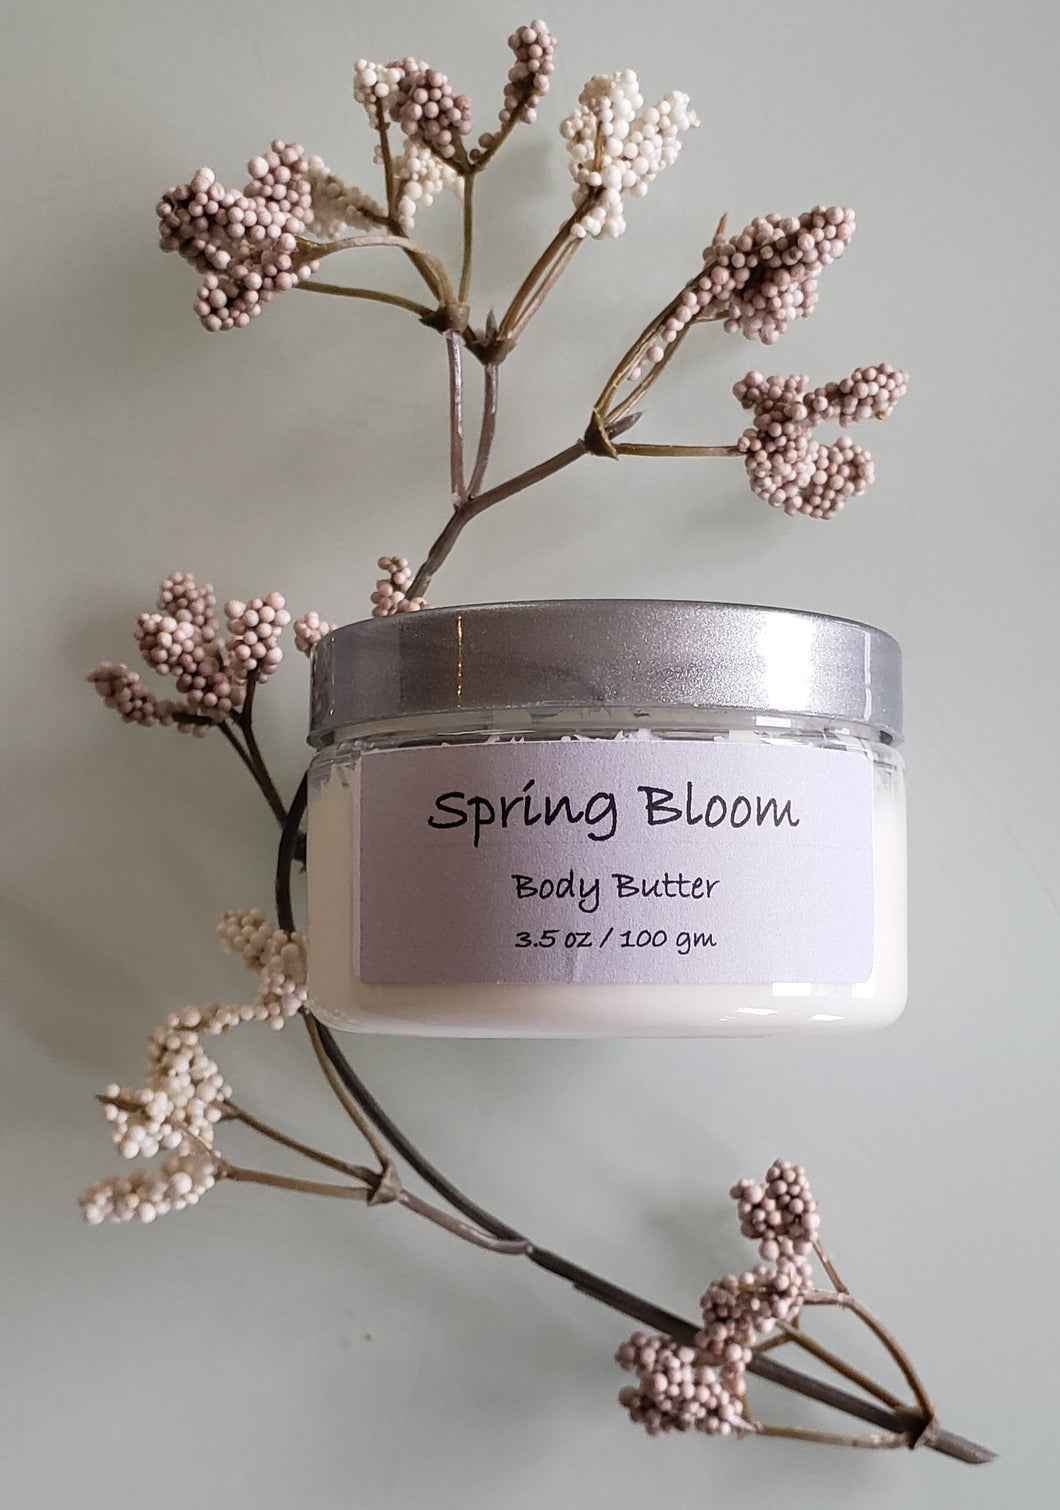 Spring Bloom Body Butter - 3.5 oz / 100 gm